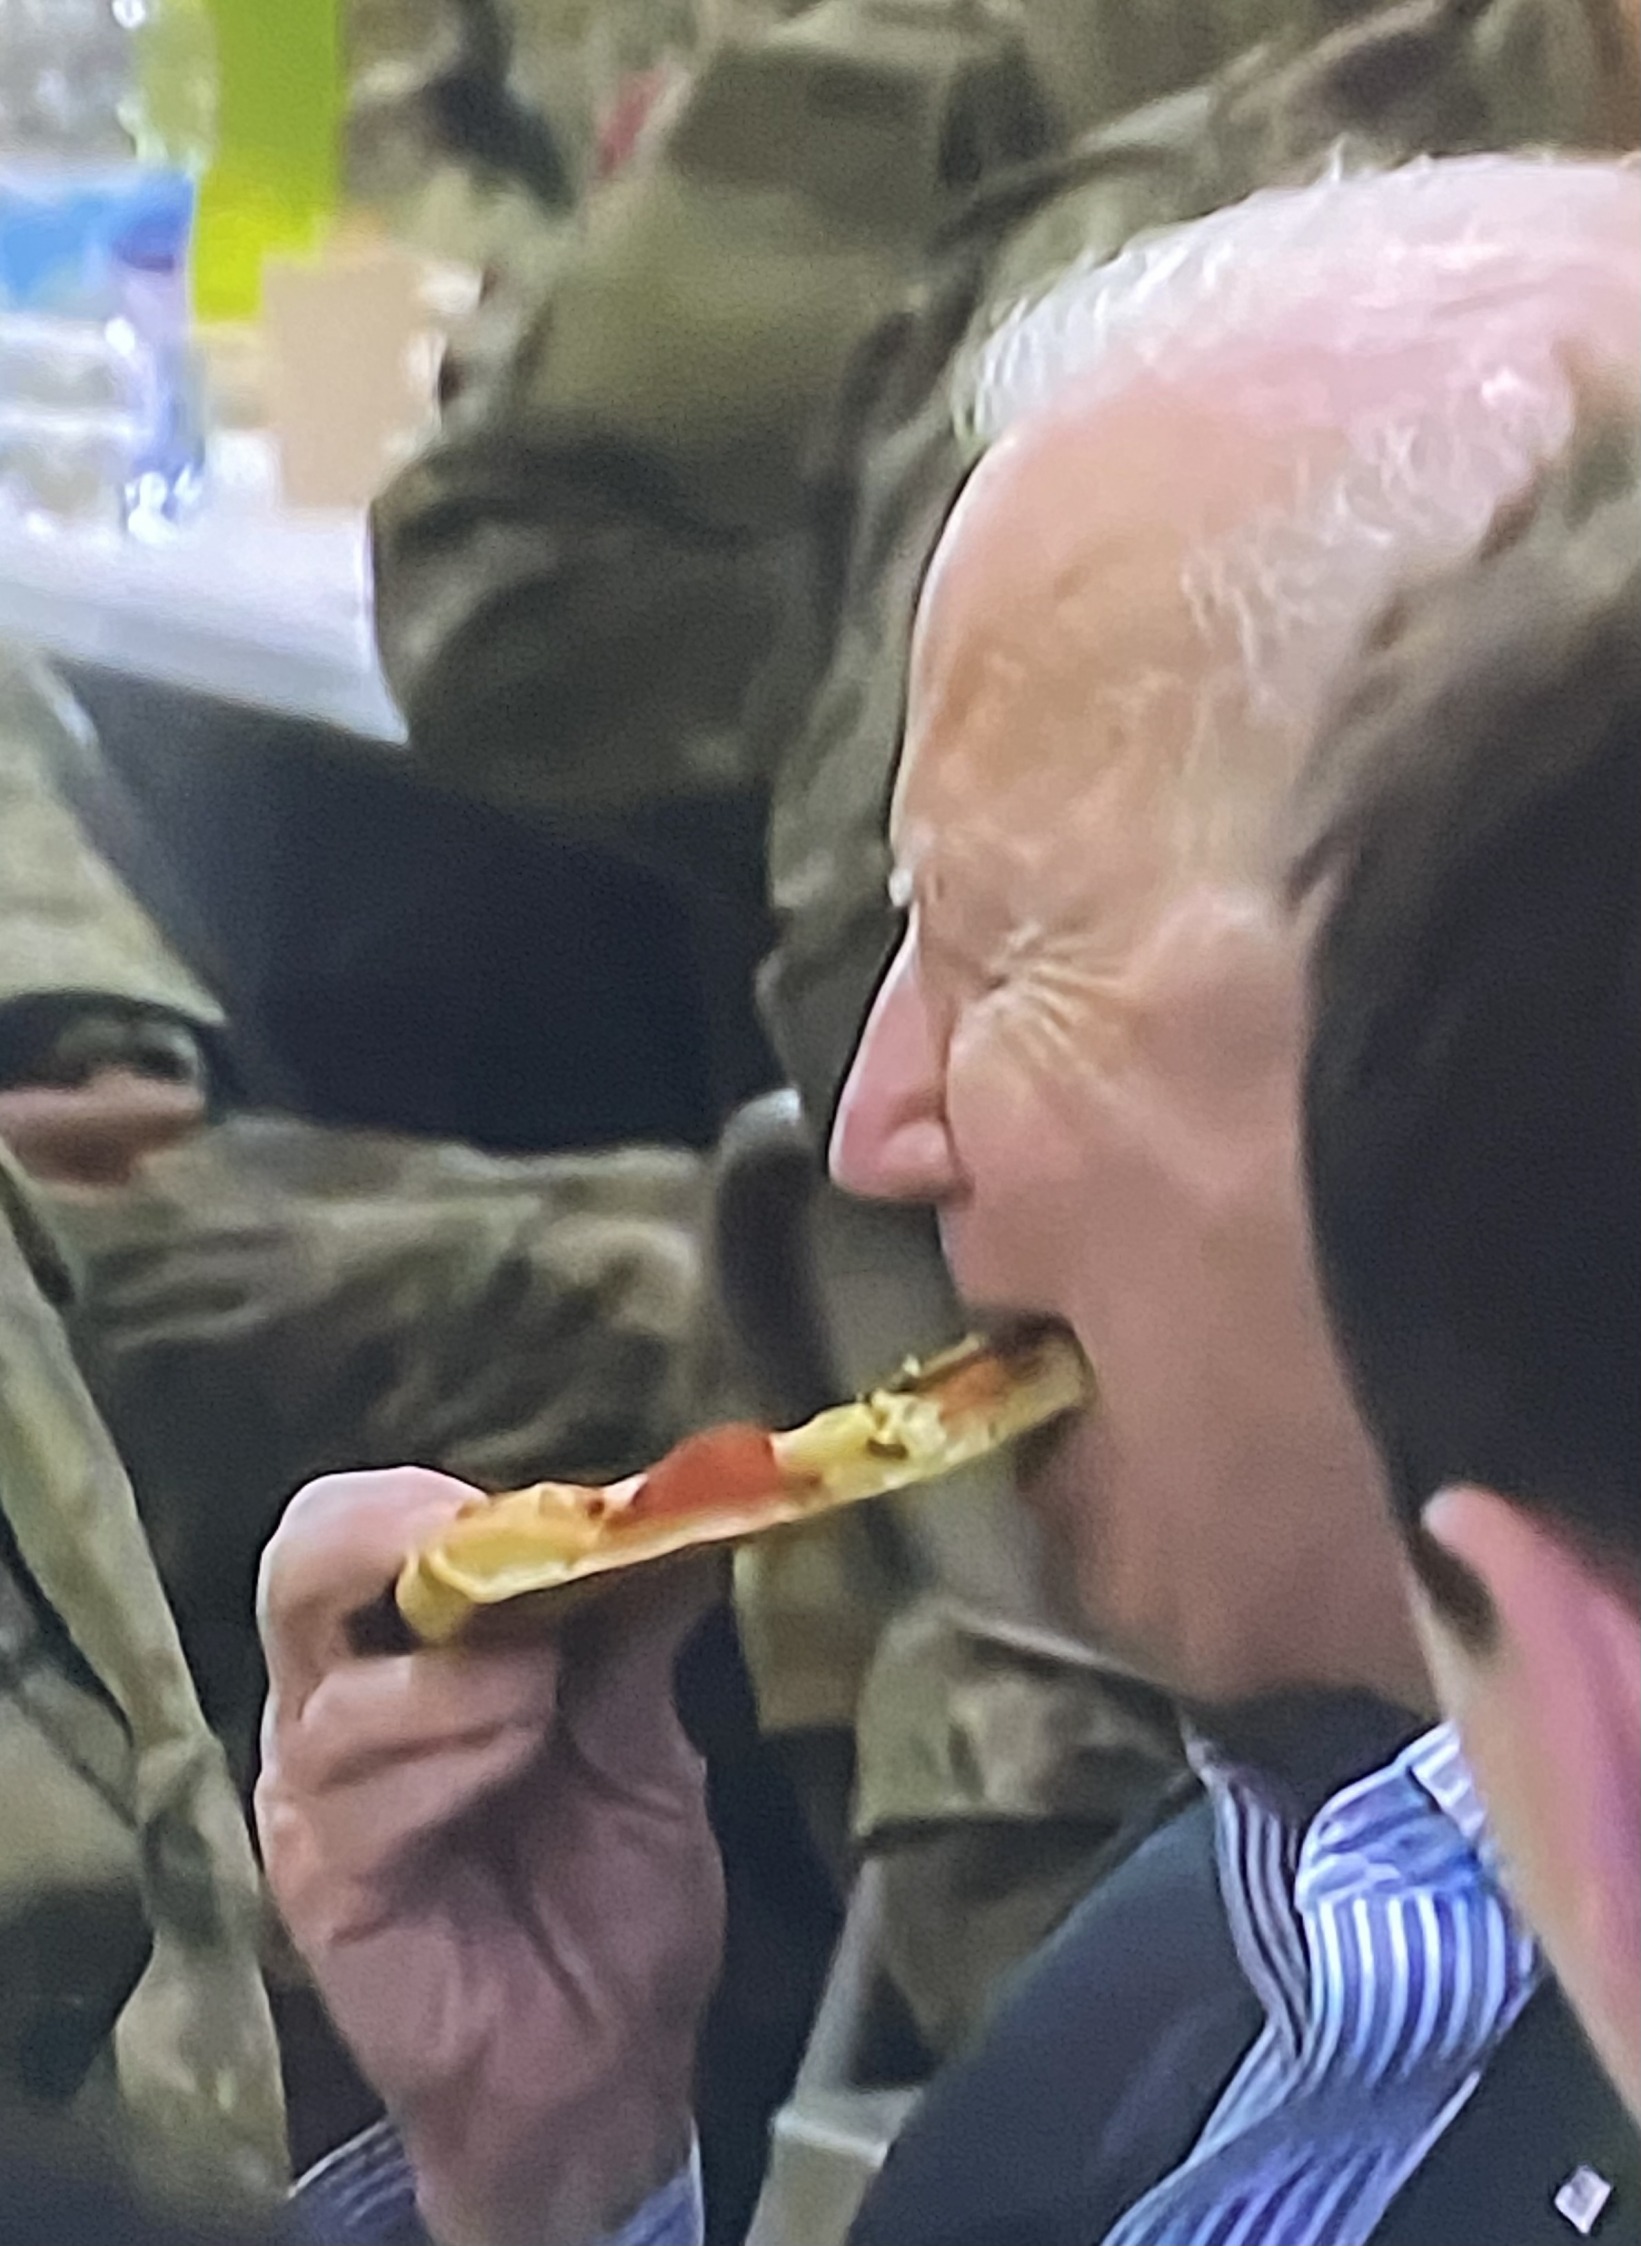 Biden enjoys some pizza. Blank Meme Template